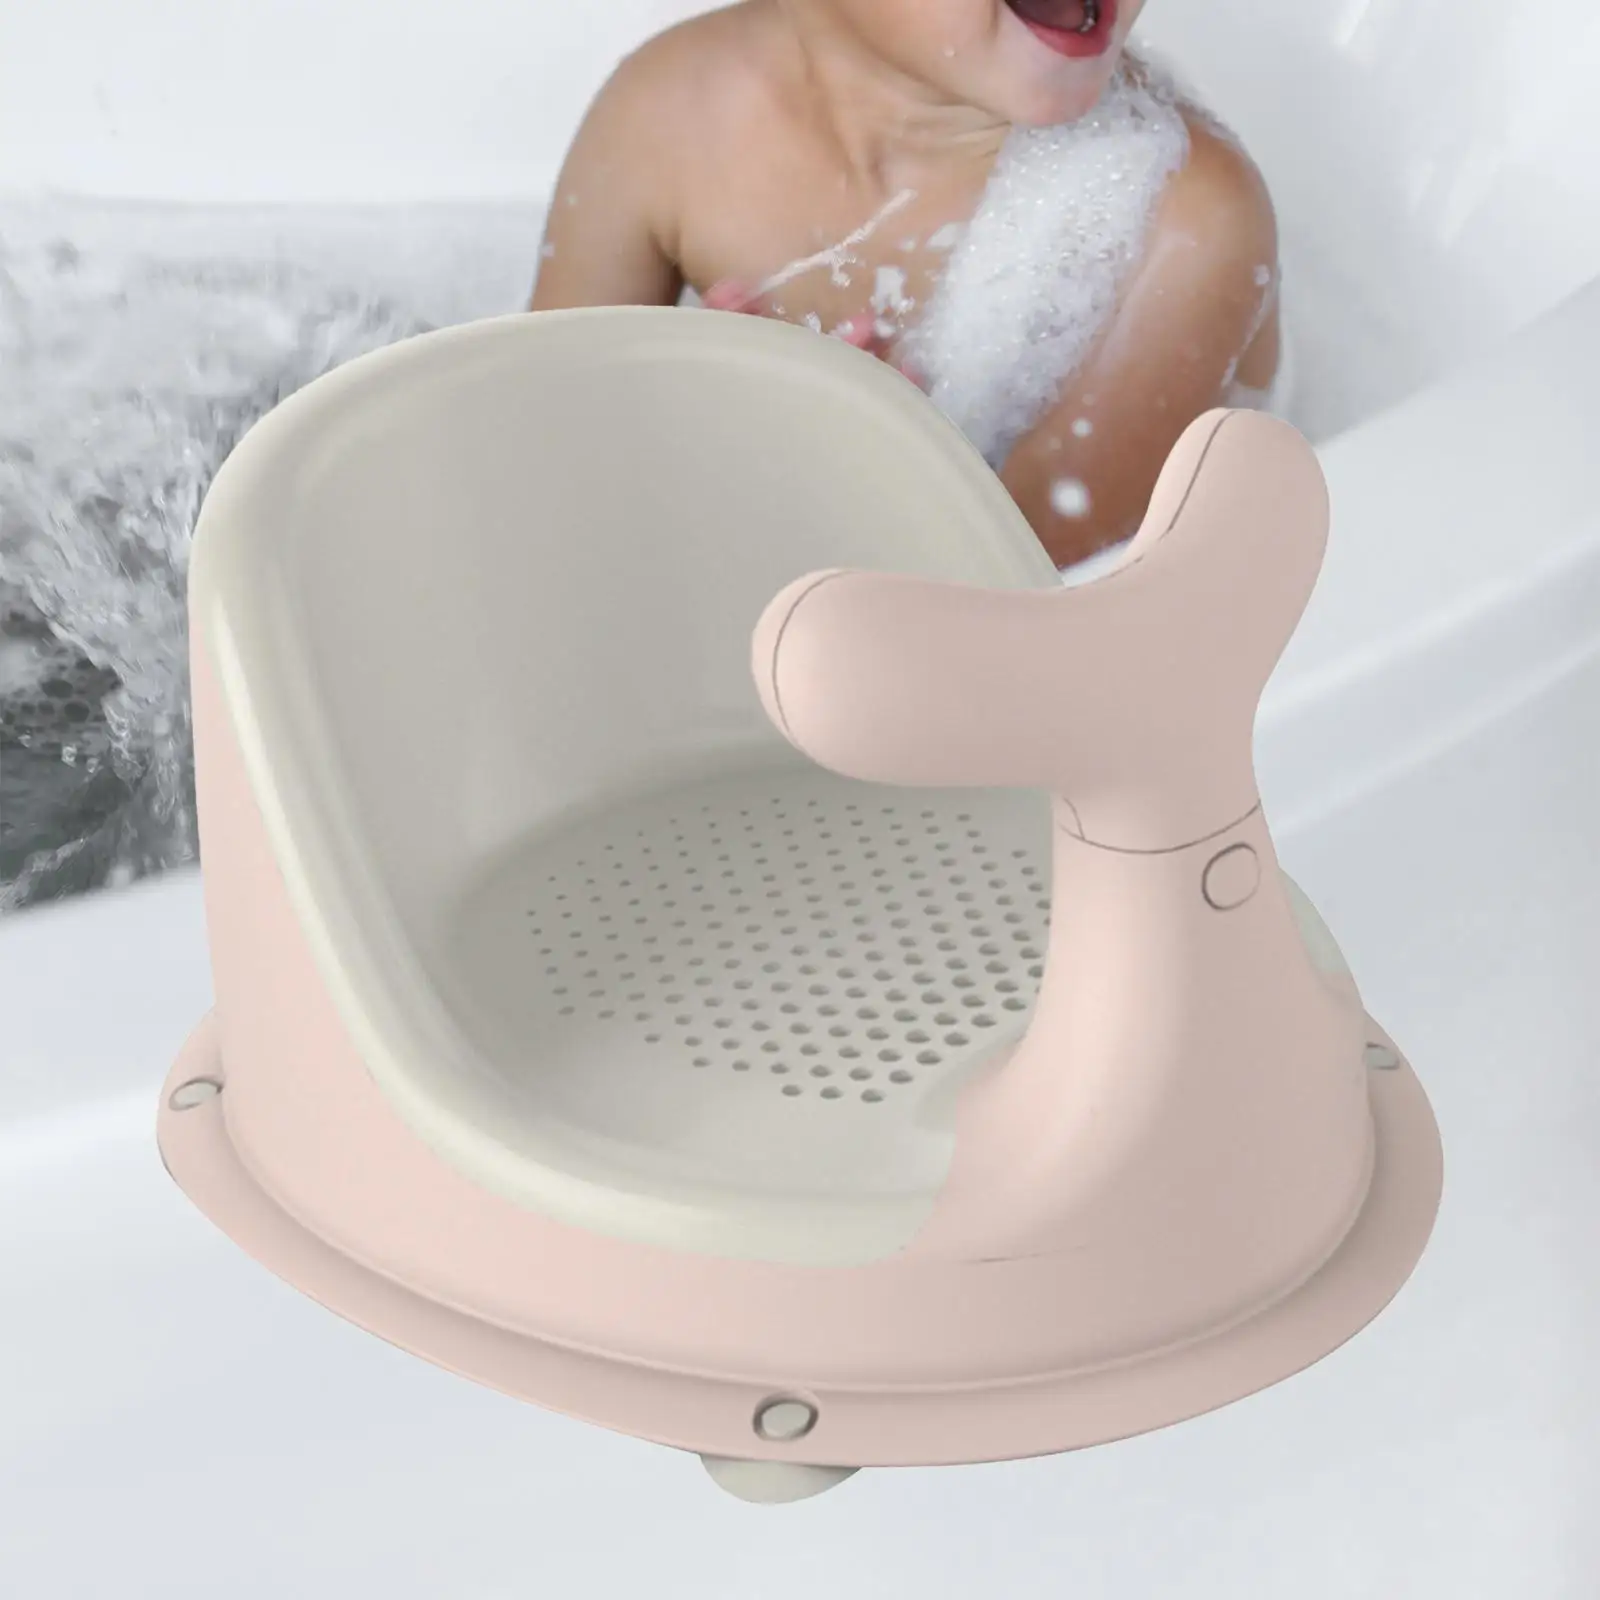 Infant Shower Chair Portable Shower Stool Newborn Bath Seat for Bathroom